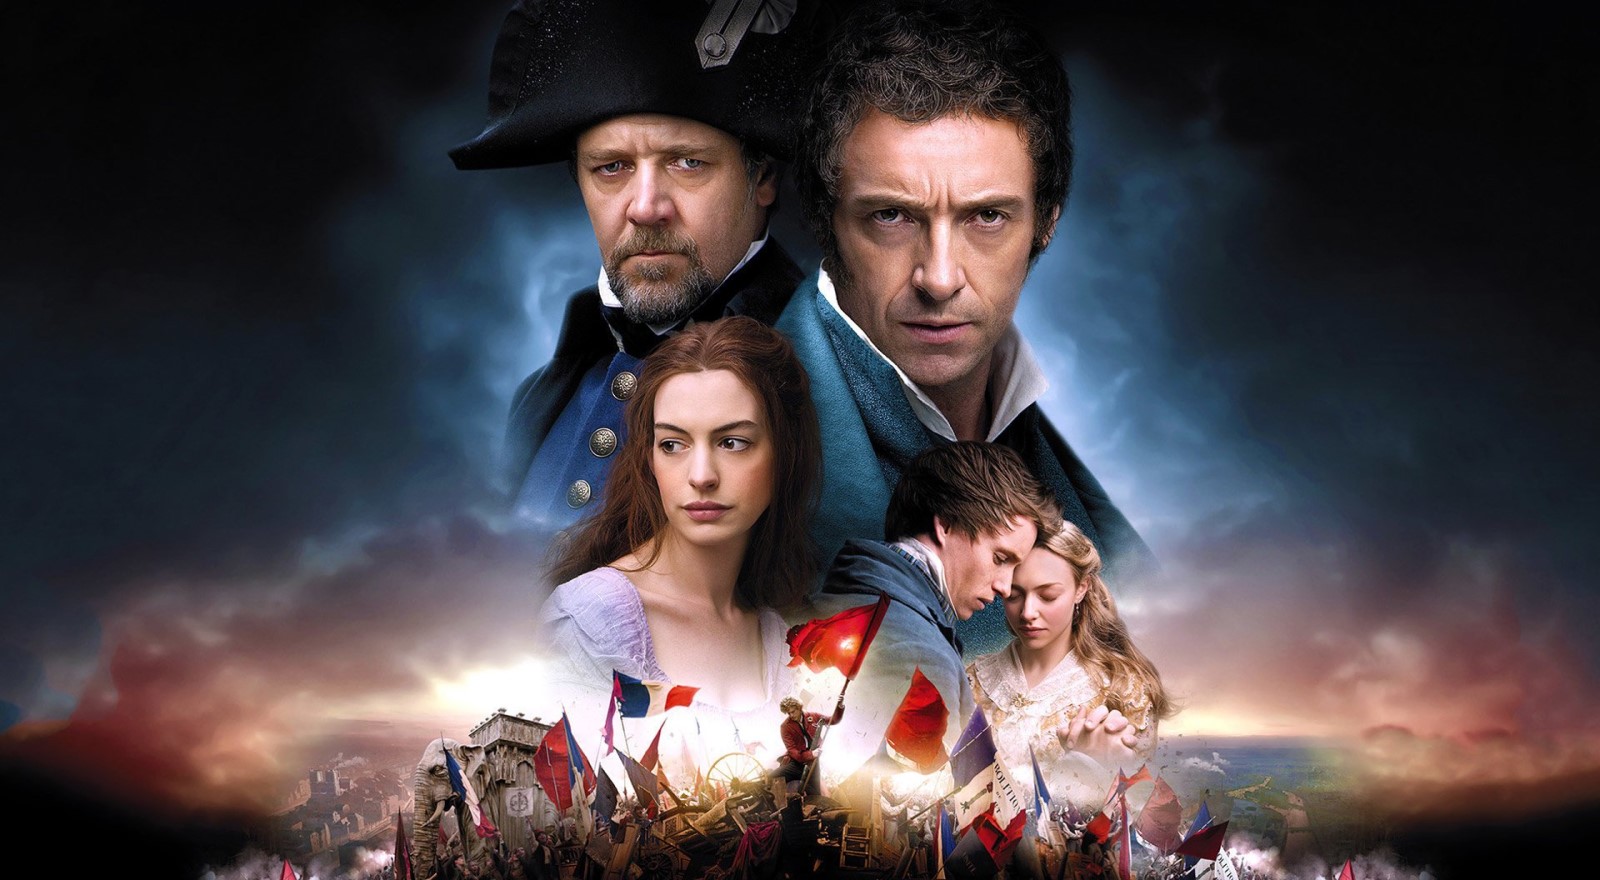 #Les Misérables kehrt im Februar in die Kinos zurück